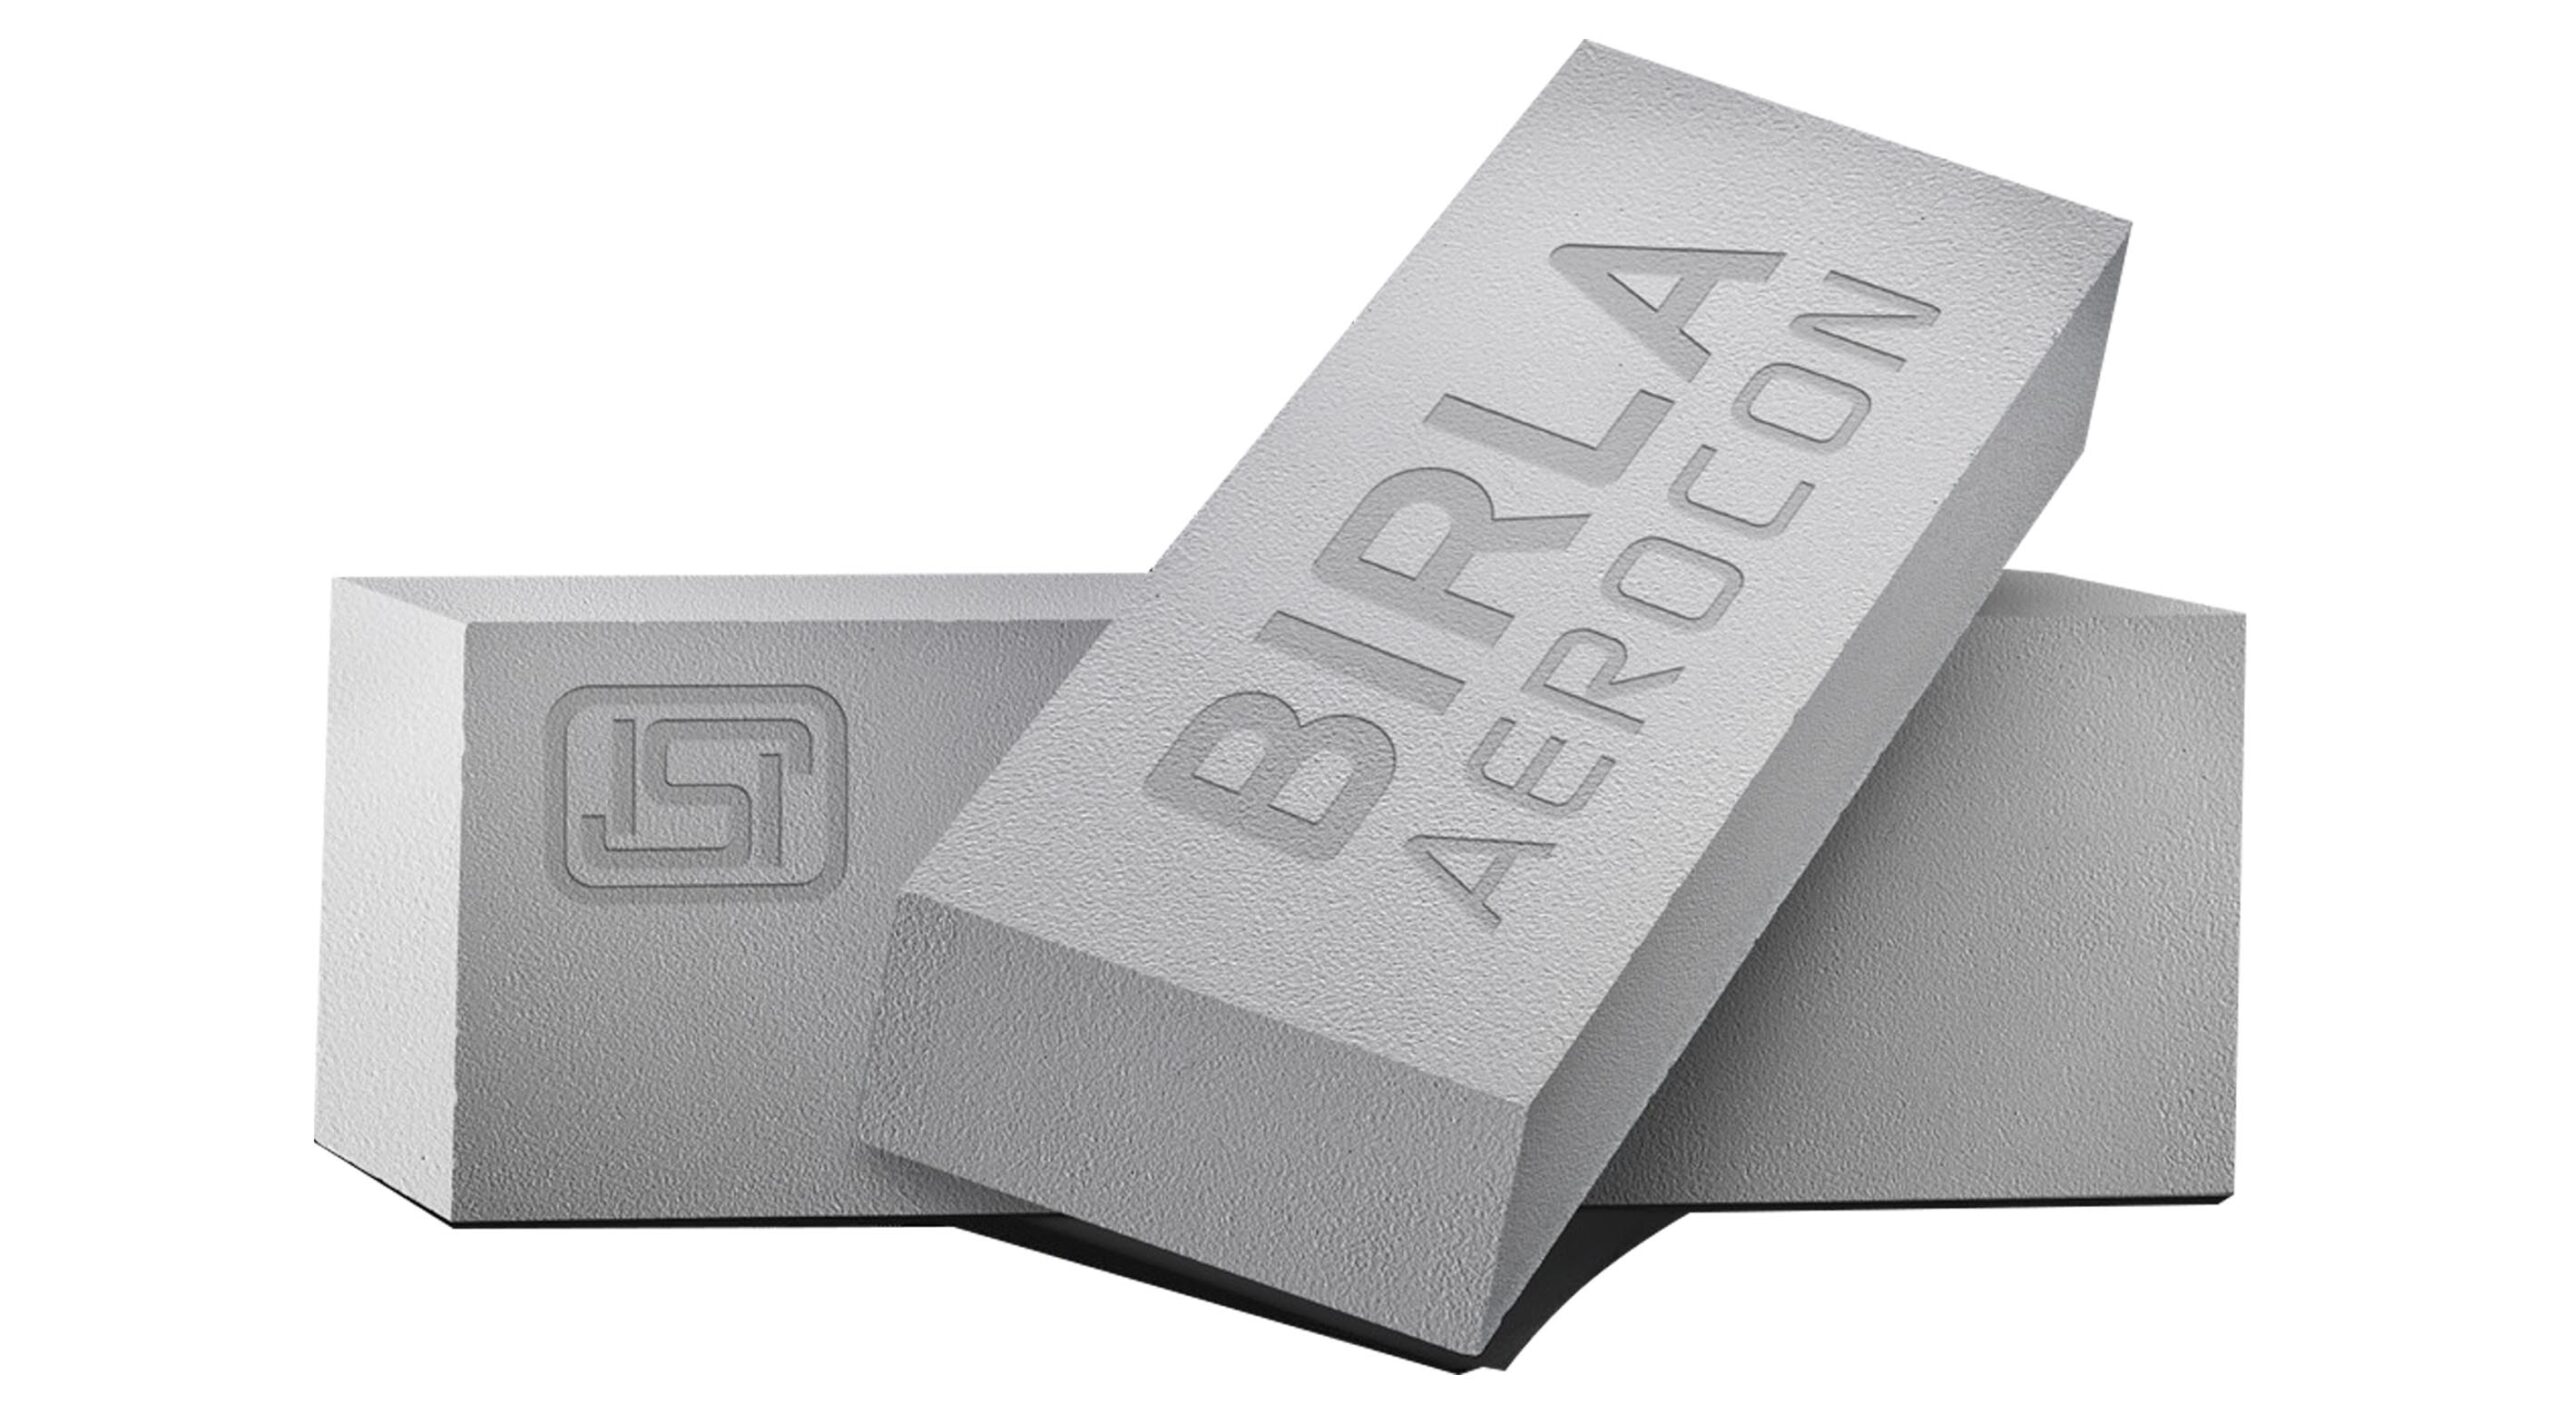 Birla Aerocon AAC Blocks: The superior technology and smarter choice